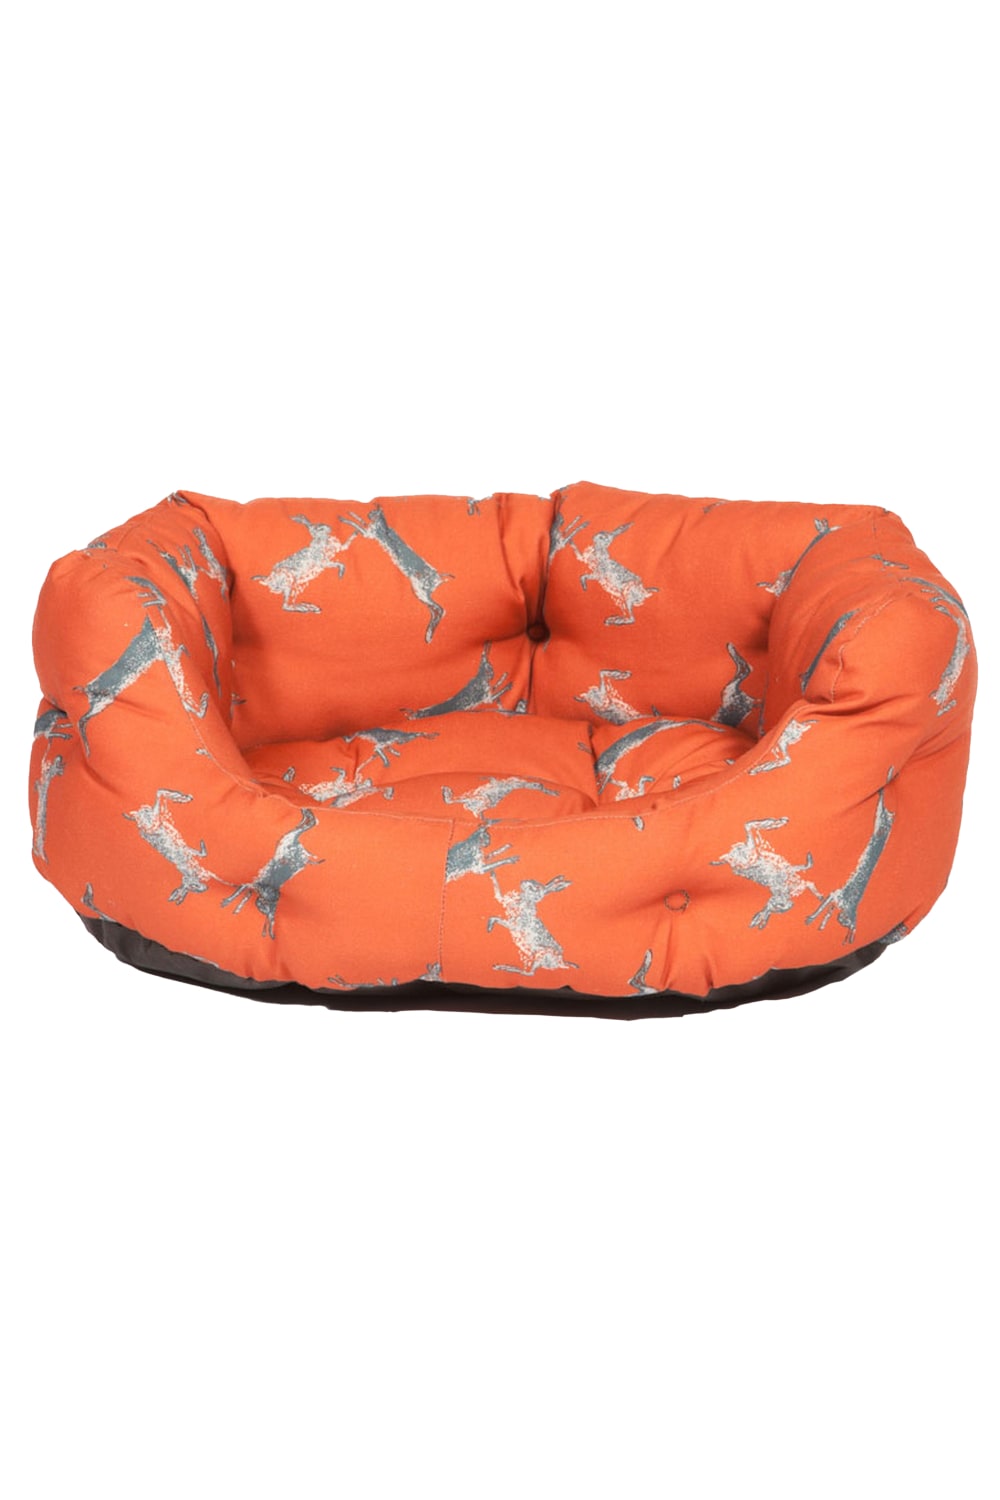 Danish Design Pet Products Deluxe Woodland Hare Slumber Bed (Russet) (24in)